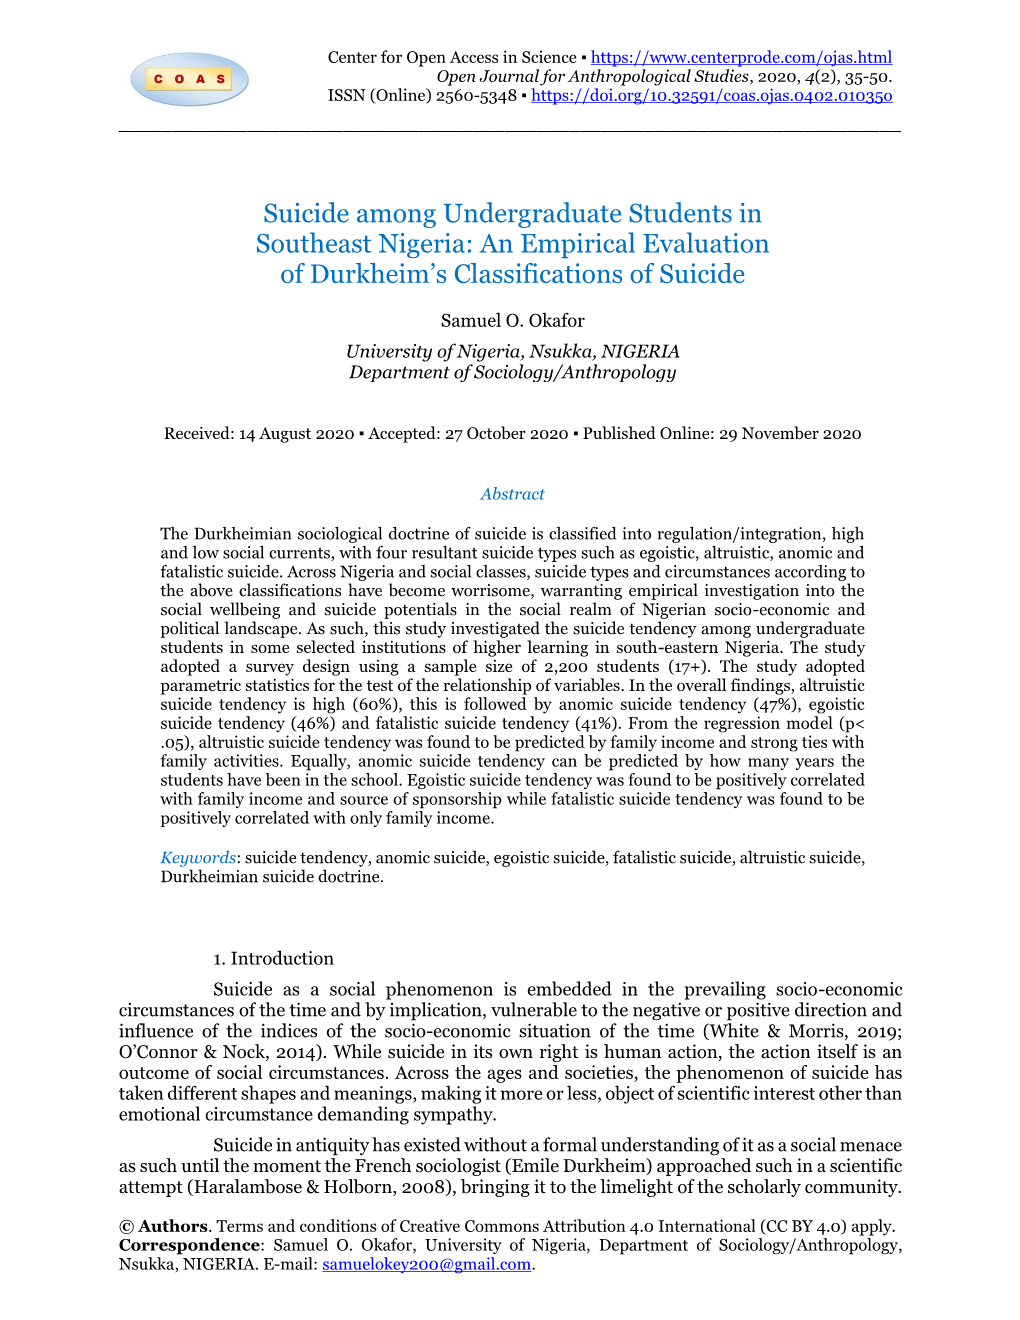 Suicide Among Undergraduate Students in Southeast Nigeria: an Empirical Evaluation of Durkheim’S Classifications of Suicide